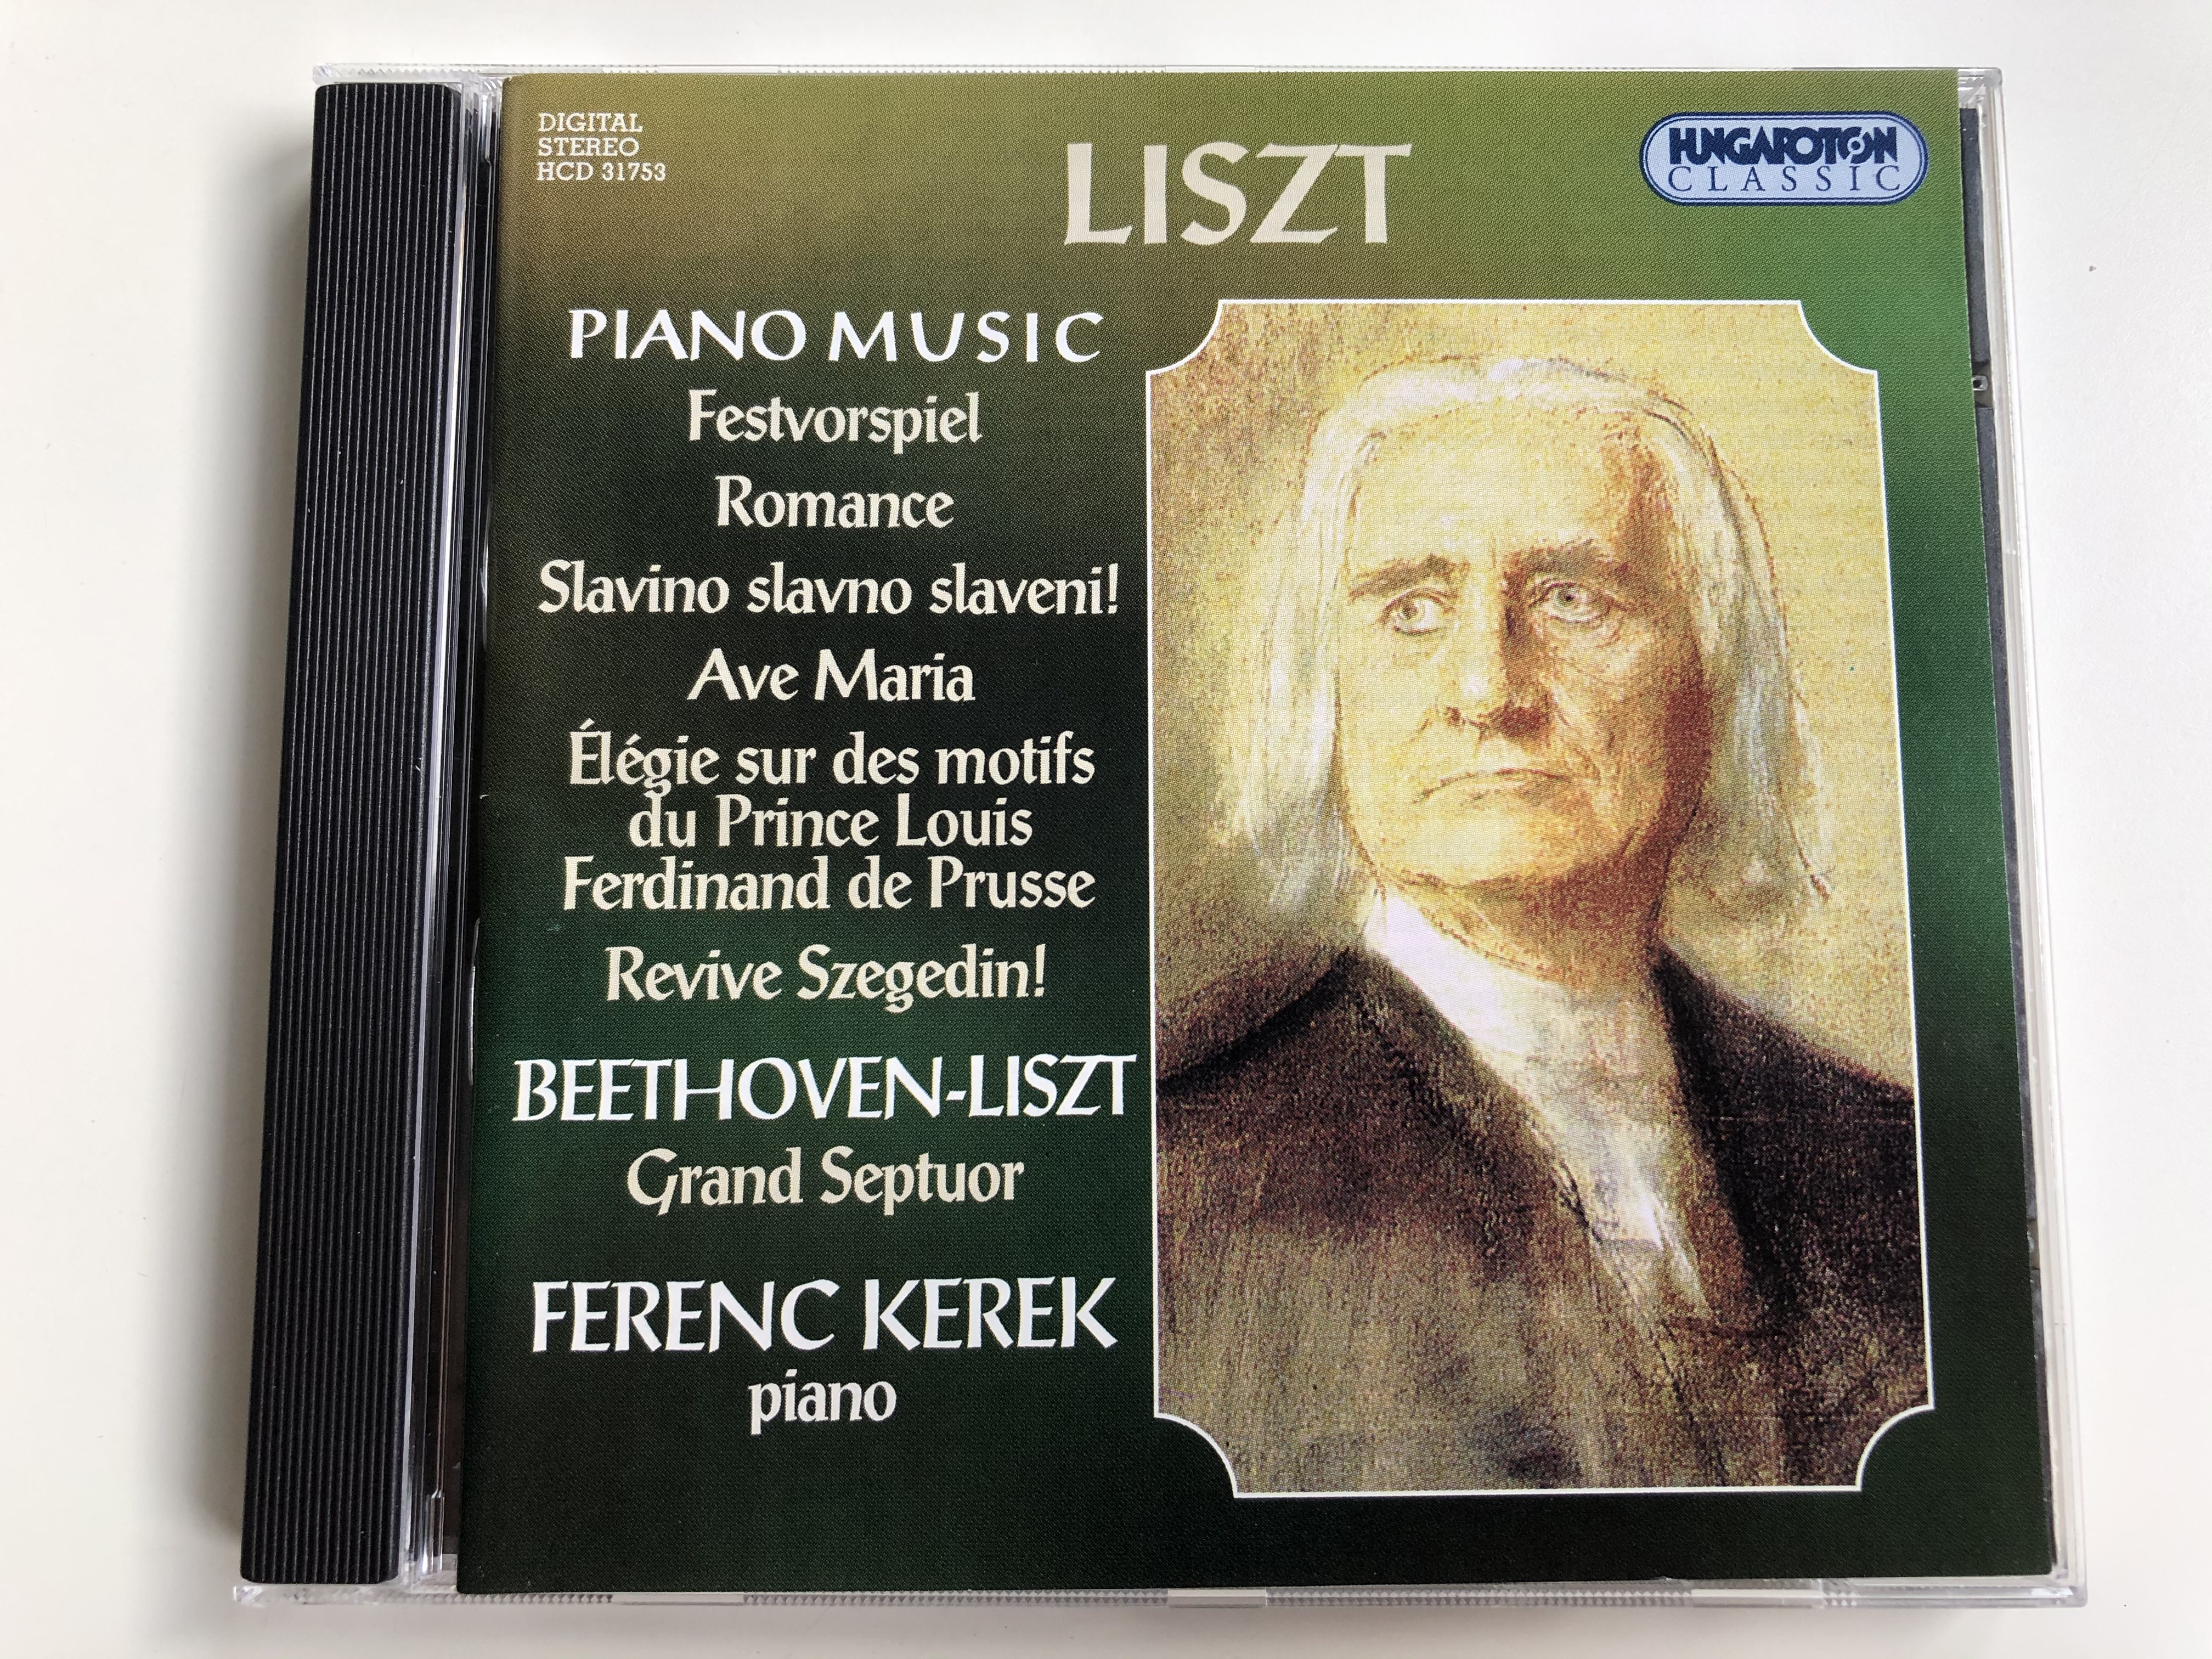 liszt-piano-music-festvorspiel-romance-slavino-slavno-slaveni-ave-maria-elegie-sur-des-motifs-du-prince-louis-ferdinand-de-prusse-revive-szegedin-beethoven-liszt-grand-septuor-hungaroto-1-.jpg